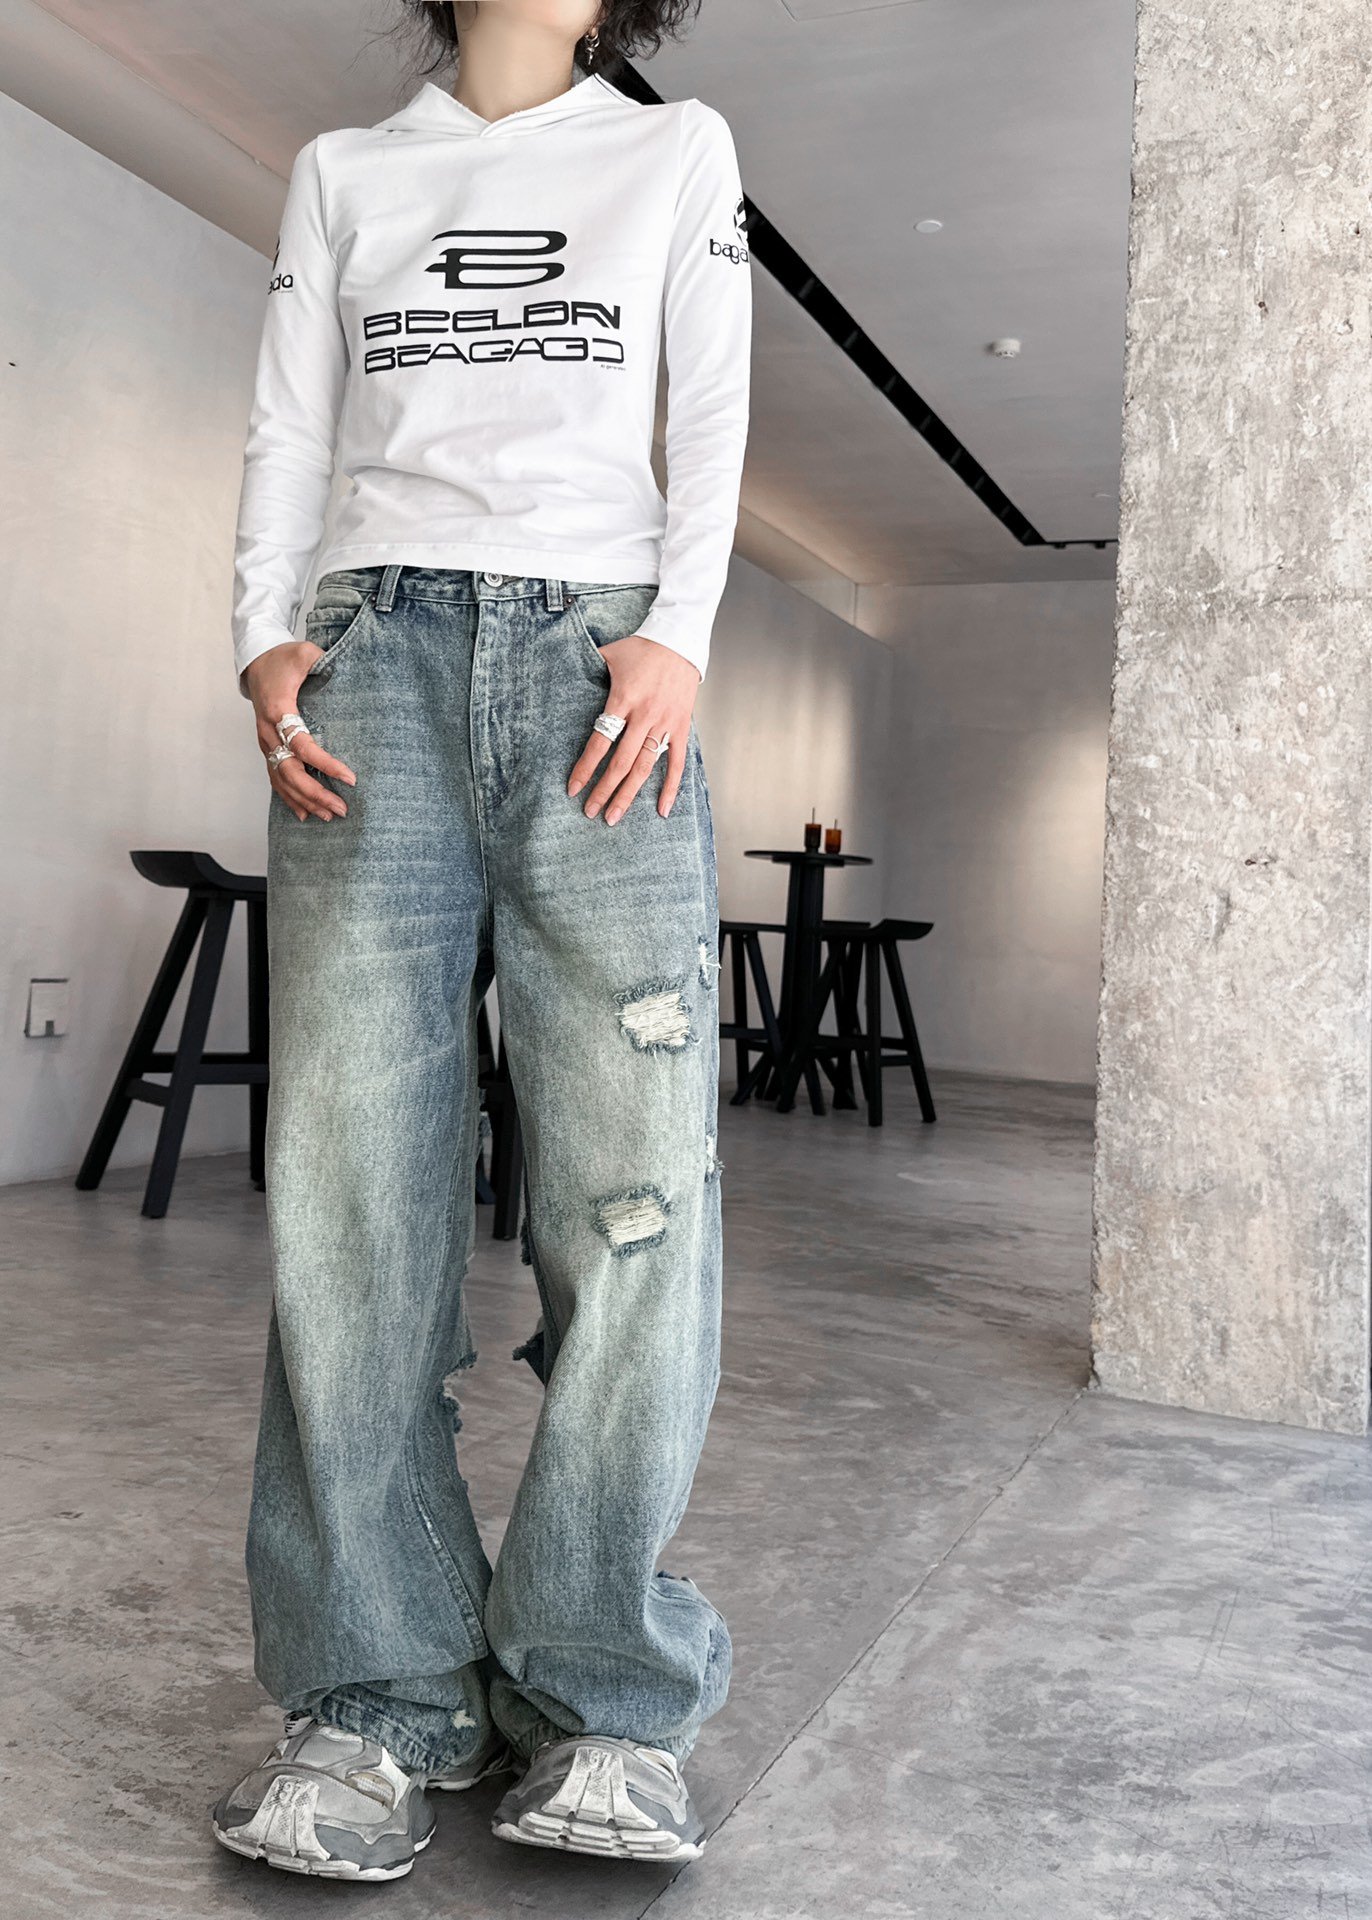 NEW新款牛仔裤纯棉牛仔面料整身做旧水洗蓝色复古时尚背部重度破坏割破设计区别于原版过于夸张的破洞做了调整